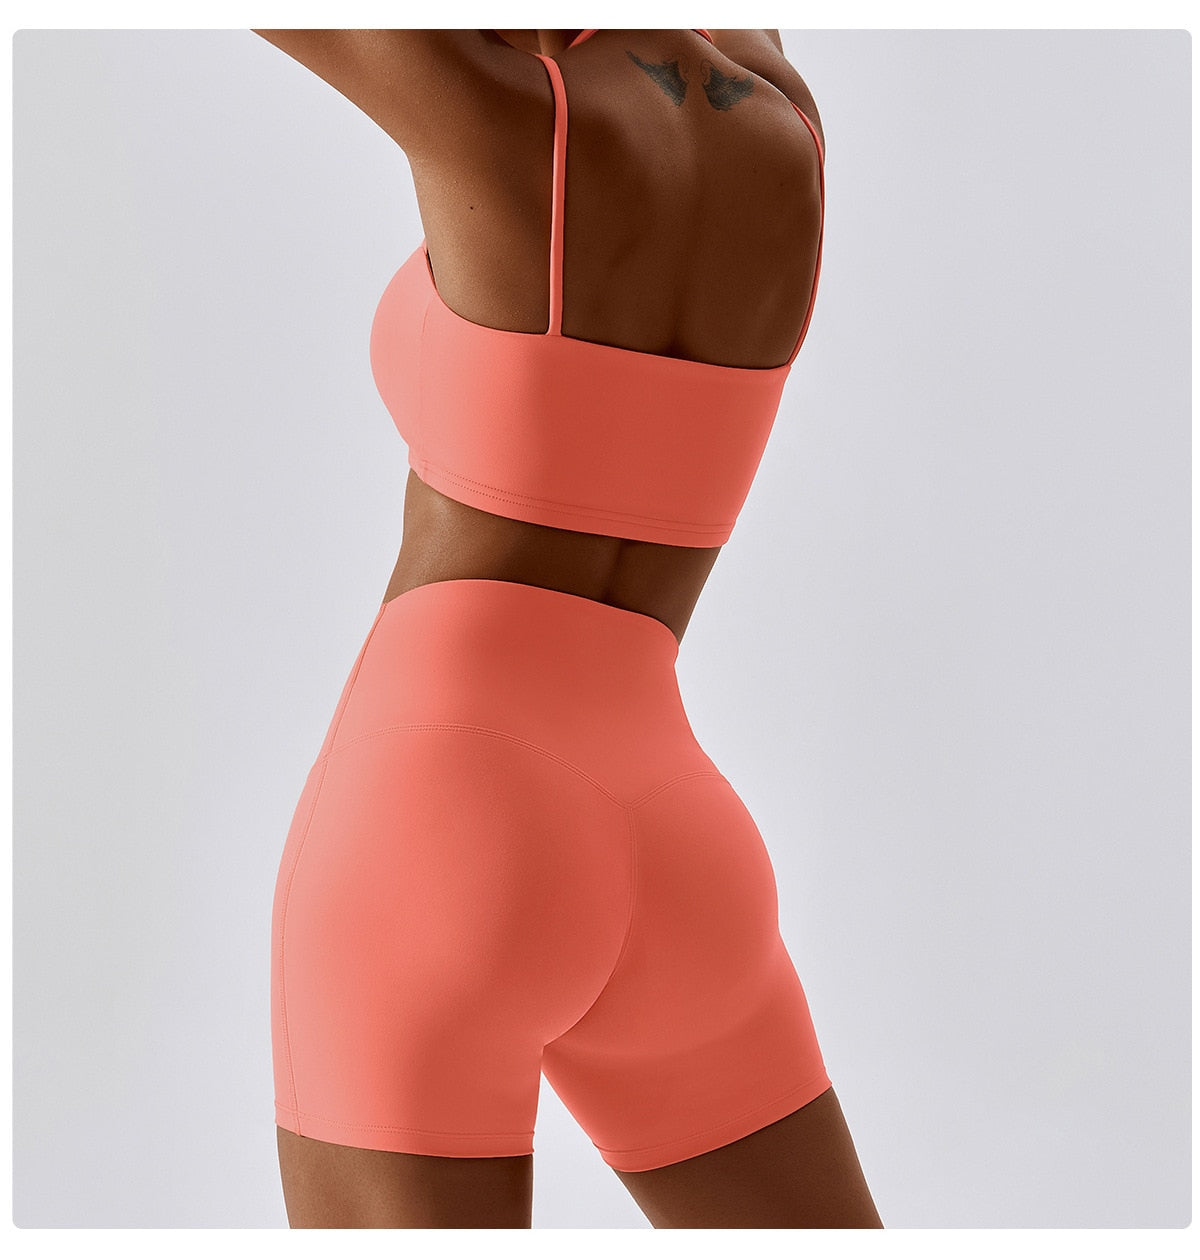 Women's Sports Underwear Gym High Strength Fitness Vest Shockproof Tight Quick-Drying Yoga Bra Outdoor Running Back Yoga Top   59.99 EZYSELLA SHOP